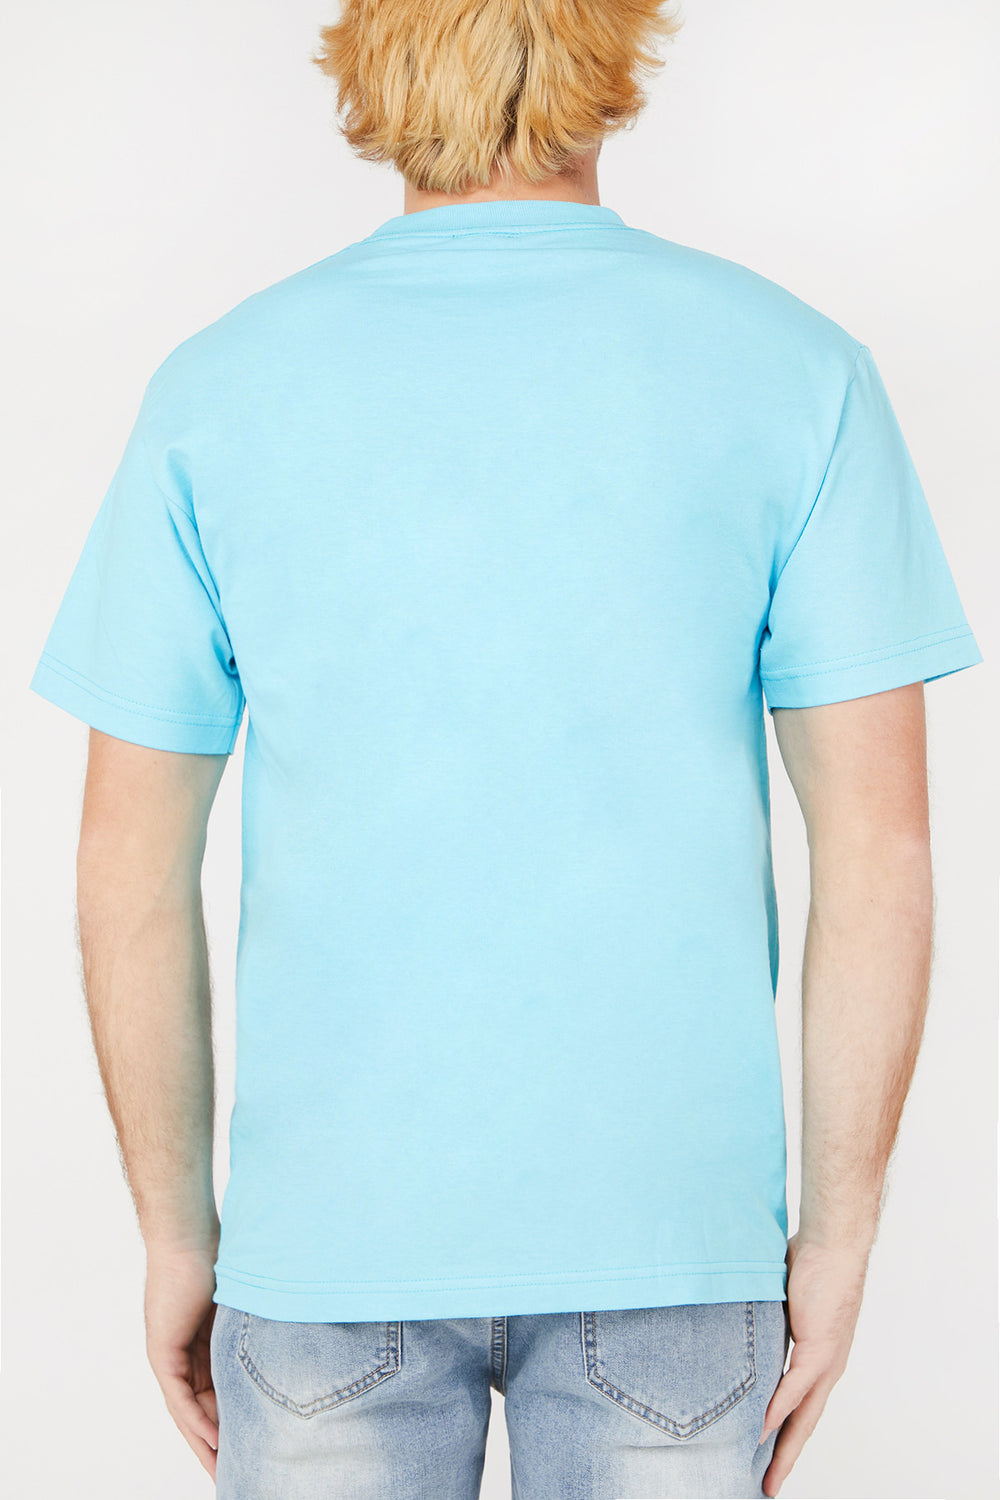 Thrasher Blue Flame T-Shirt Blue